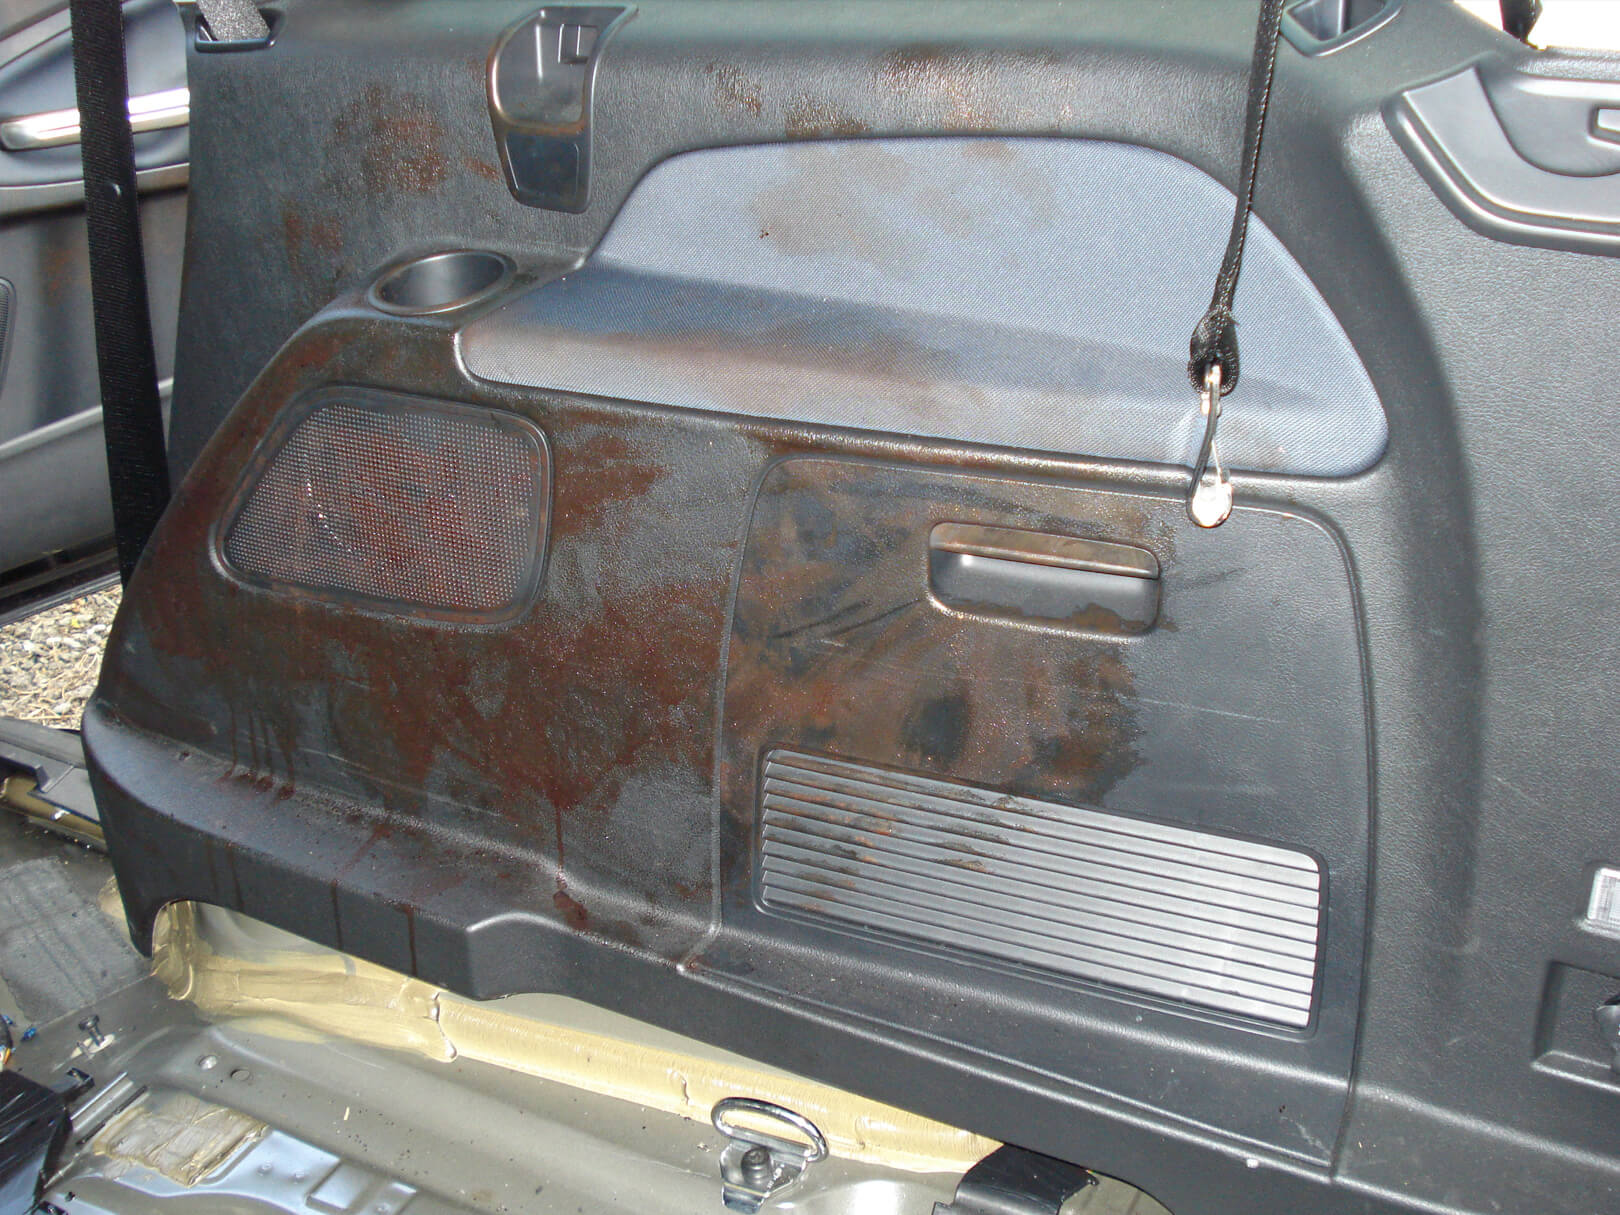 Trauma clean inside vehicle from crime scene